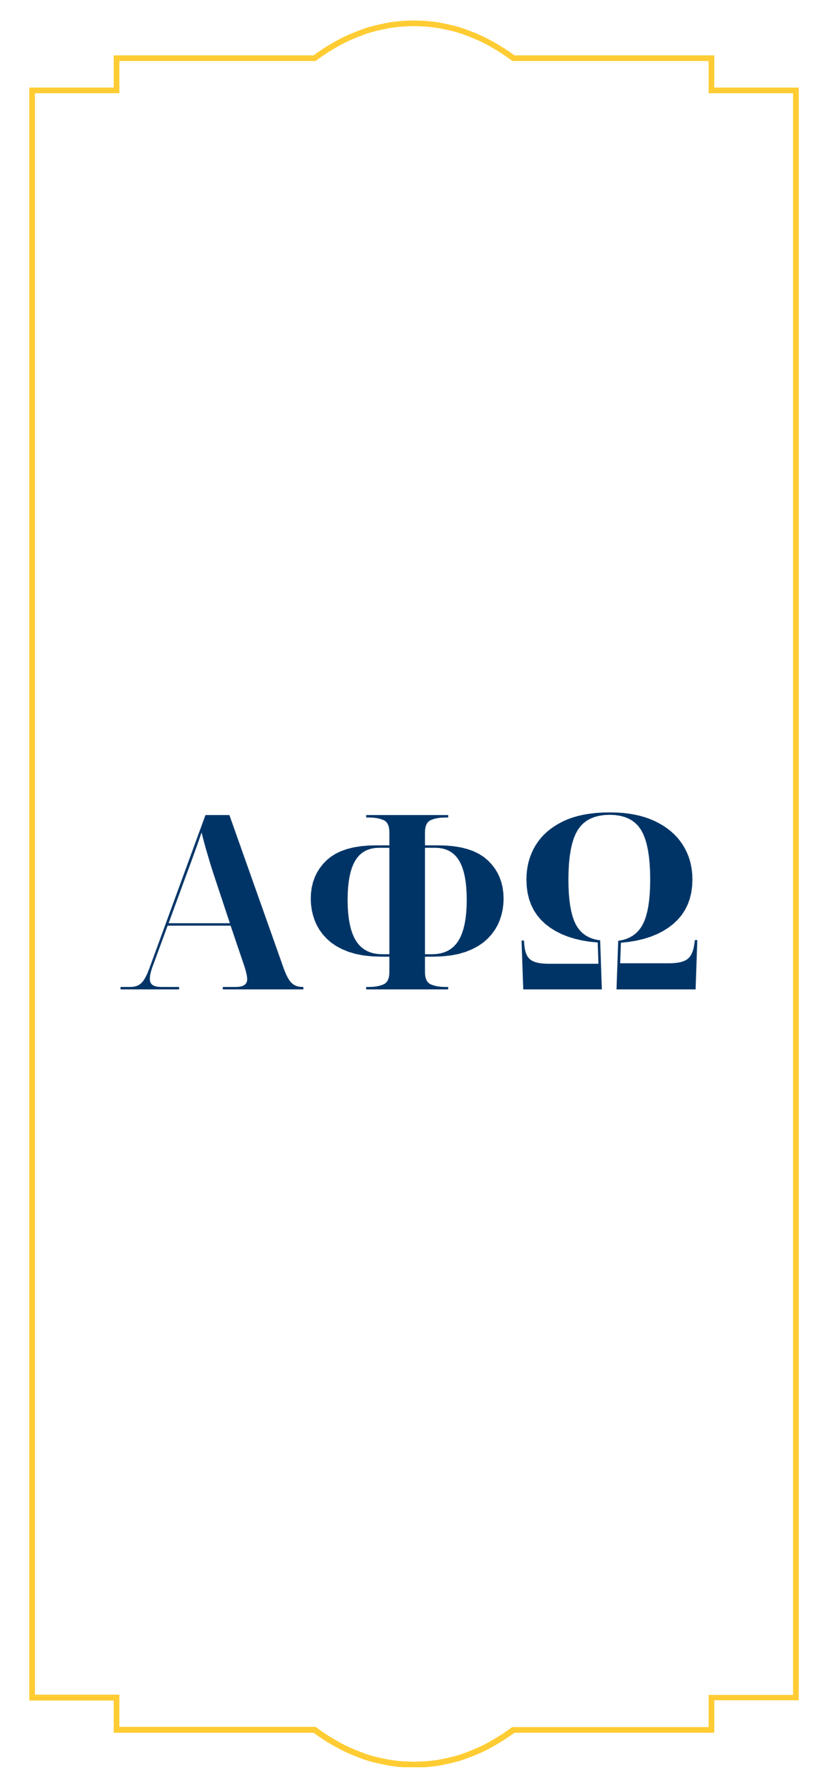 alpha phi omega logo wallpaper